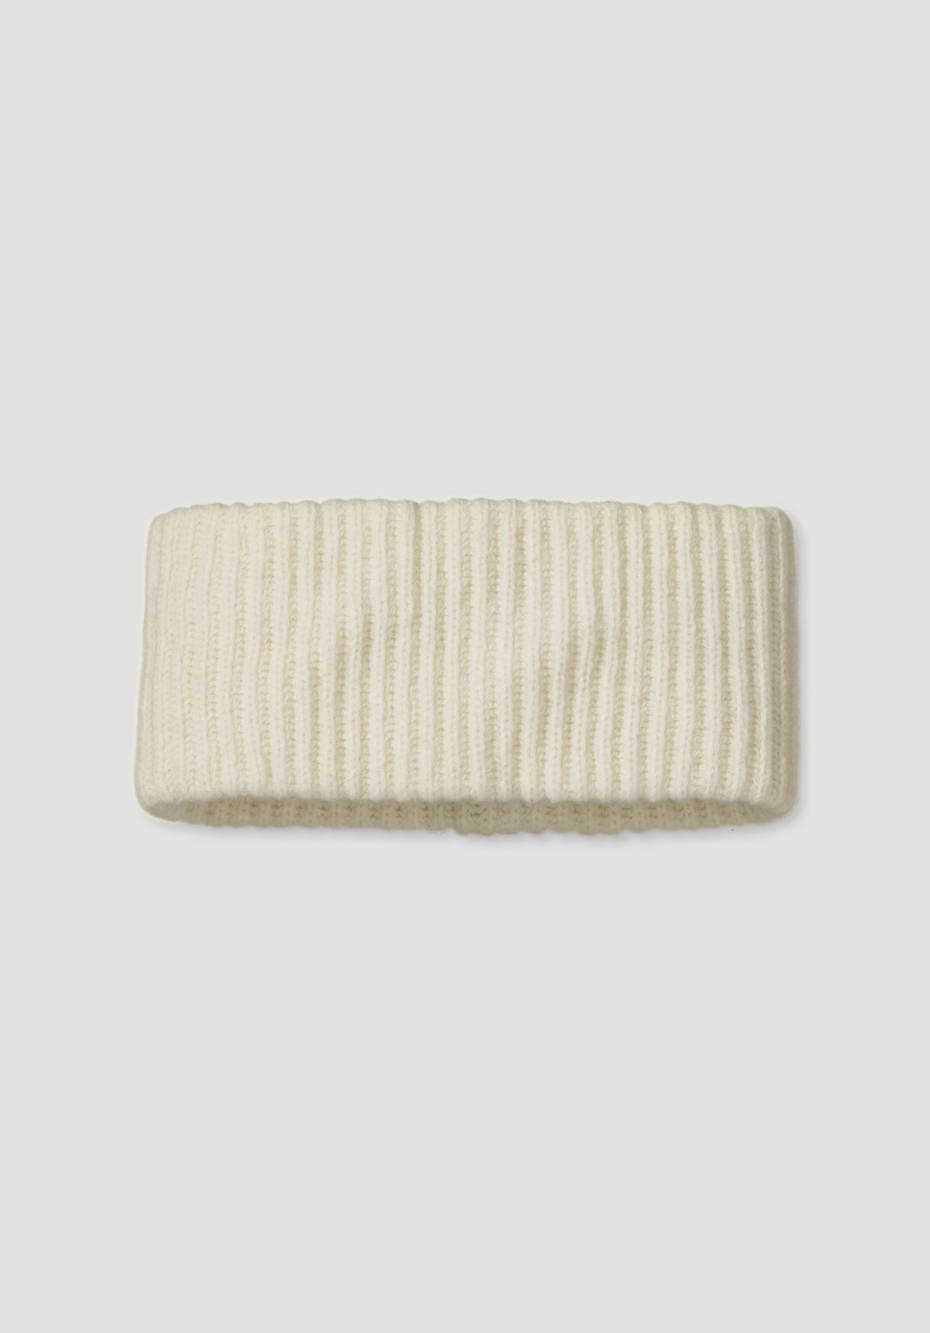 Headband made from pure organic lambswool